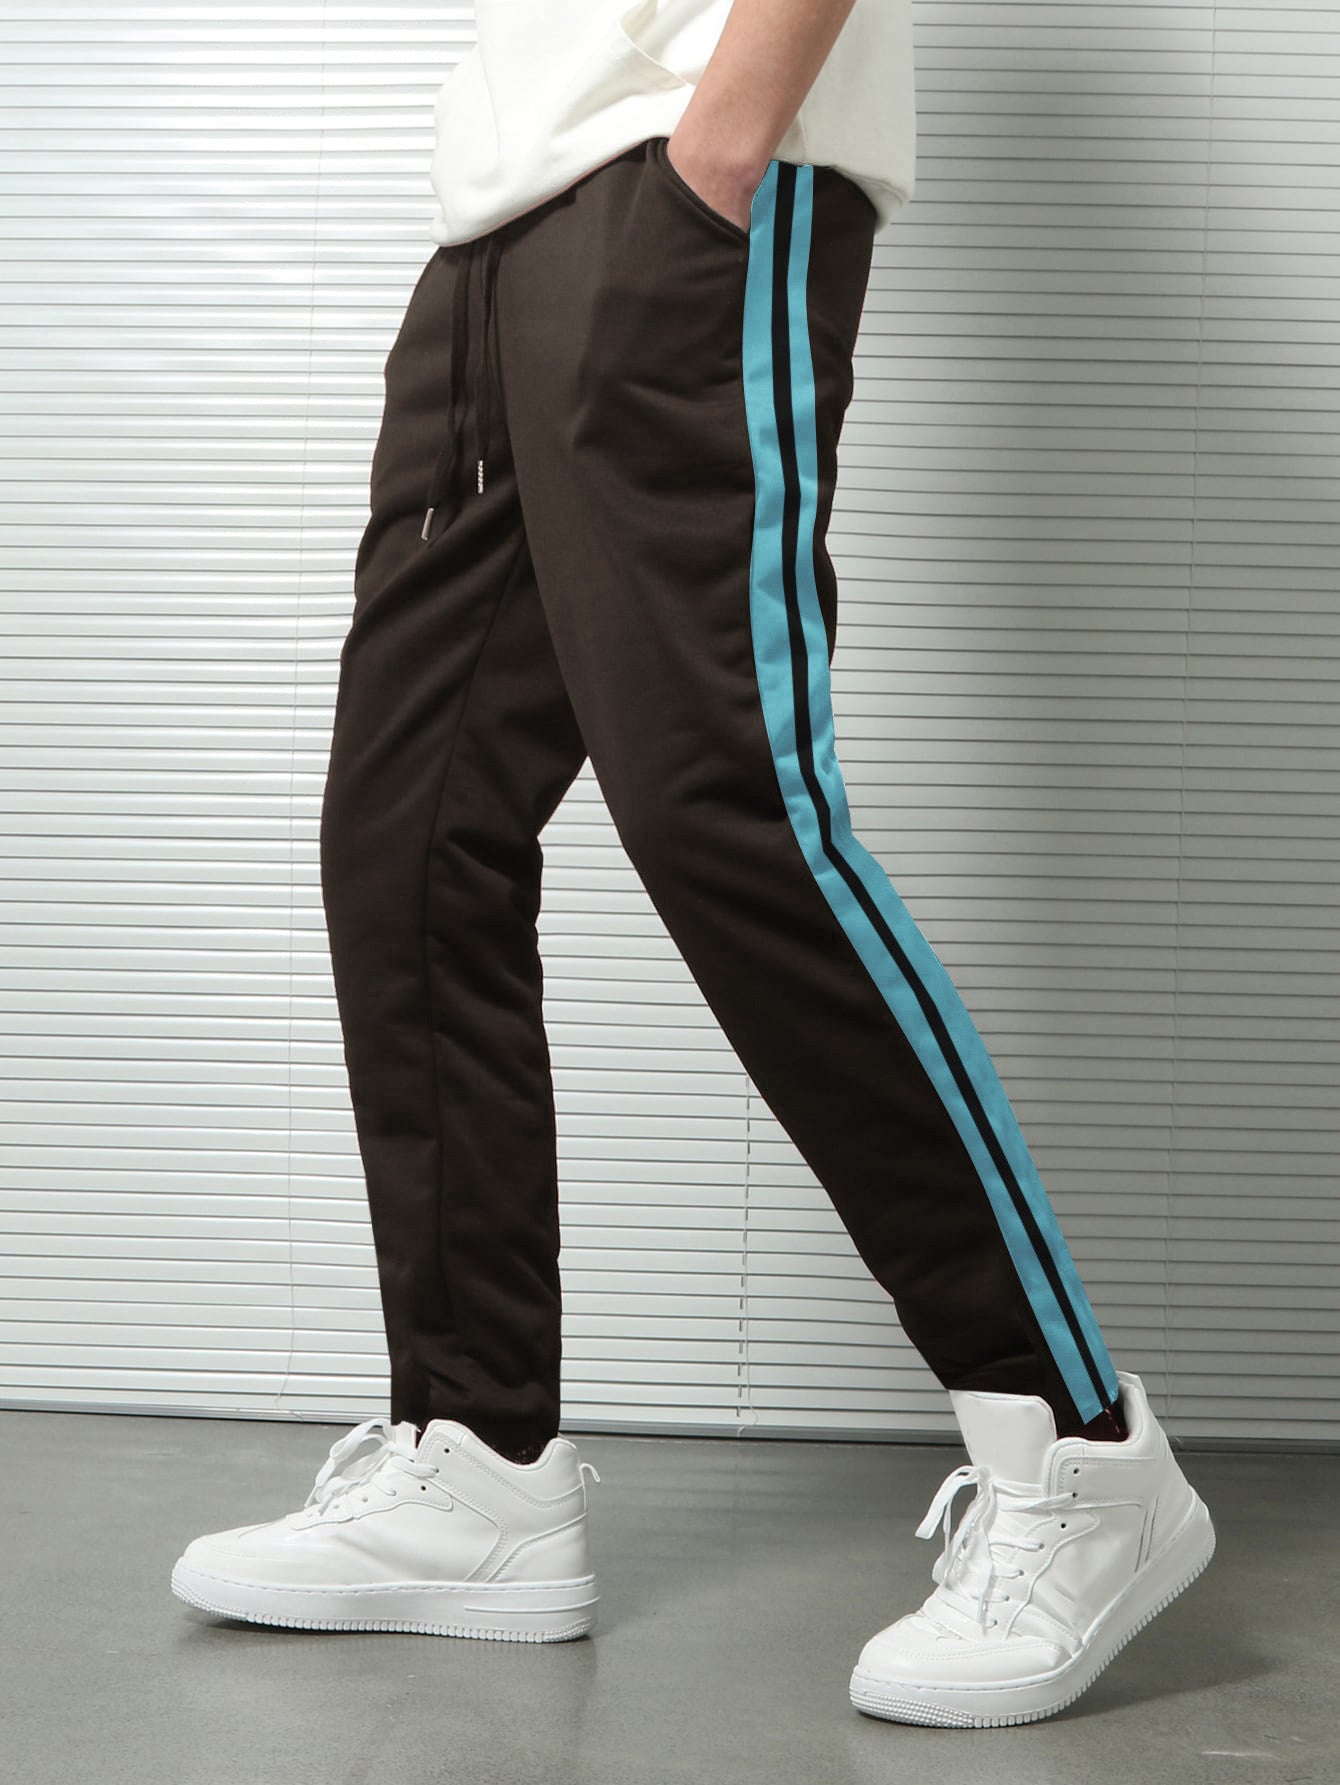 Louis Vicaci Active Wear Interlock Trouser For Men-Brown Sky & Black Stripe-SP1728